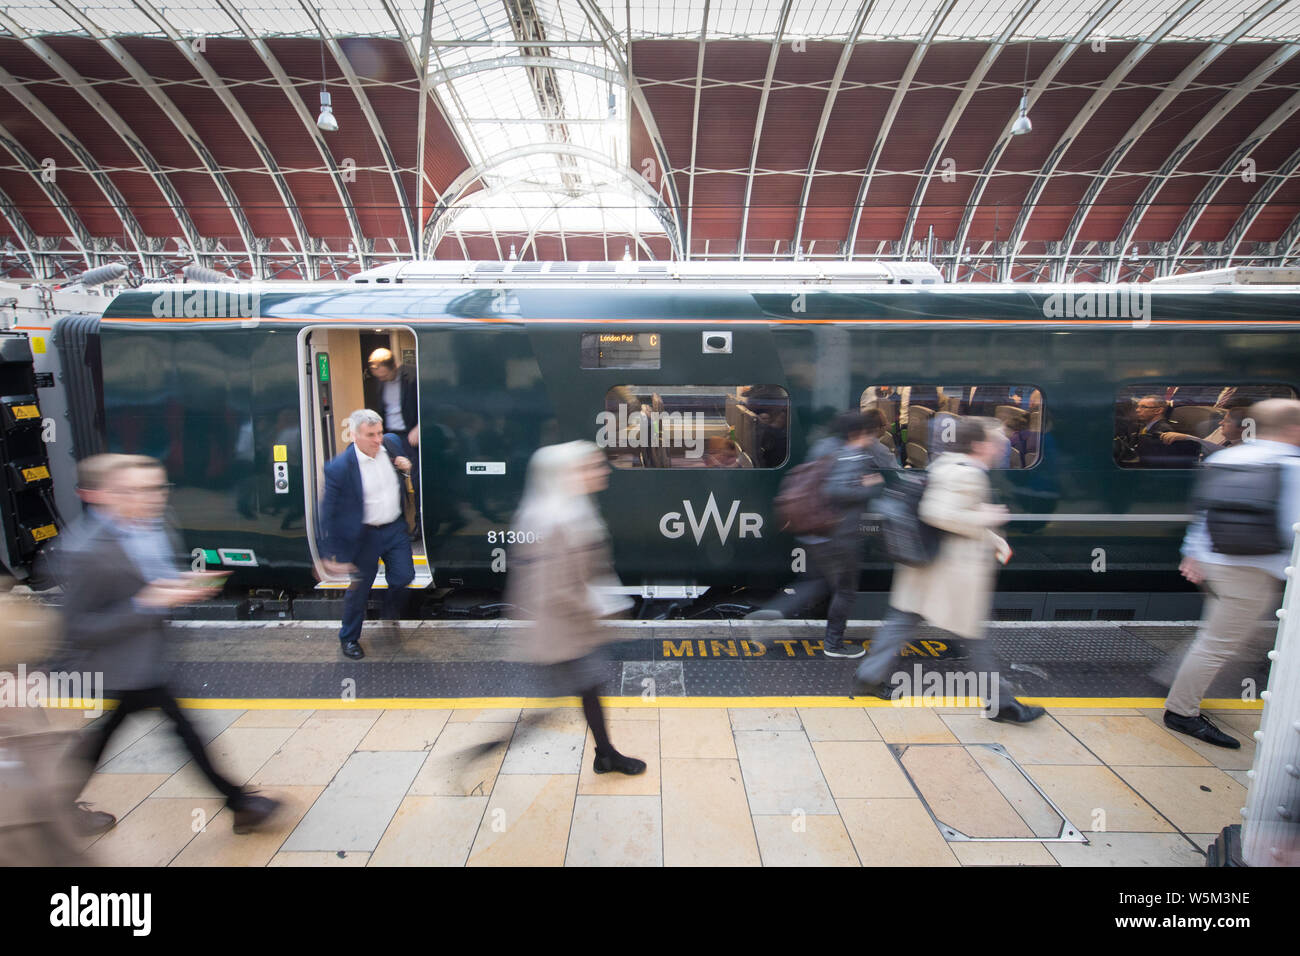 Great Western Railway GWR Intercity Express Trains at Paddington Station Stock Photo